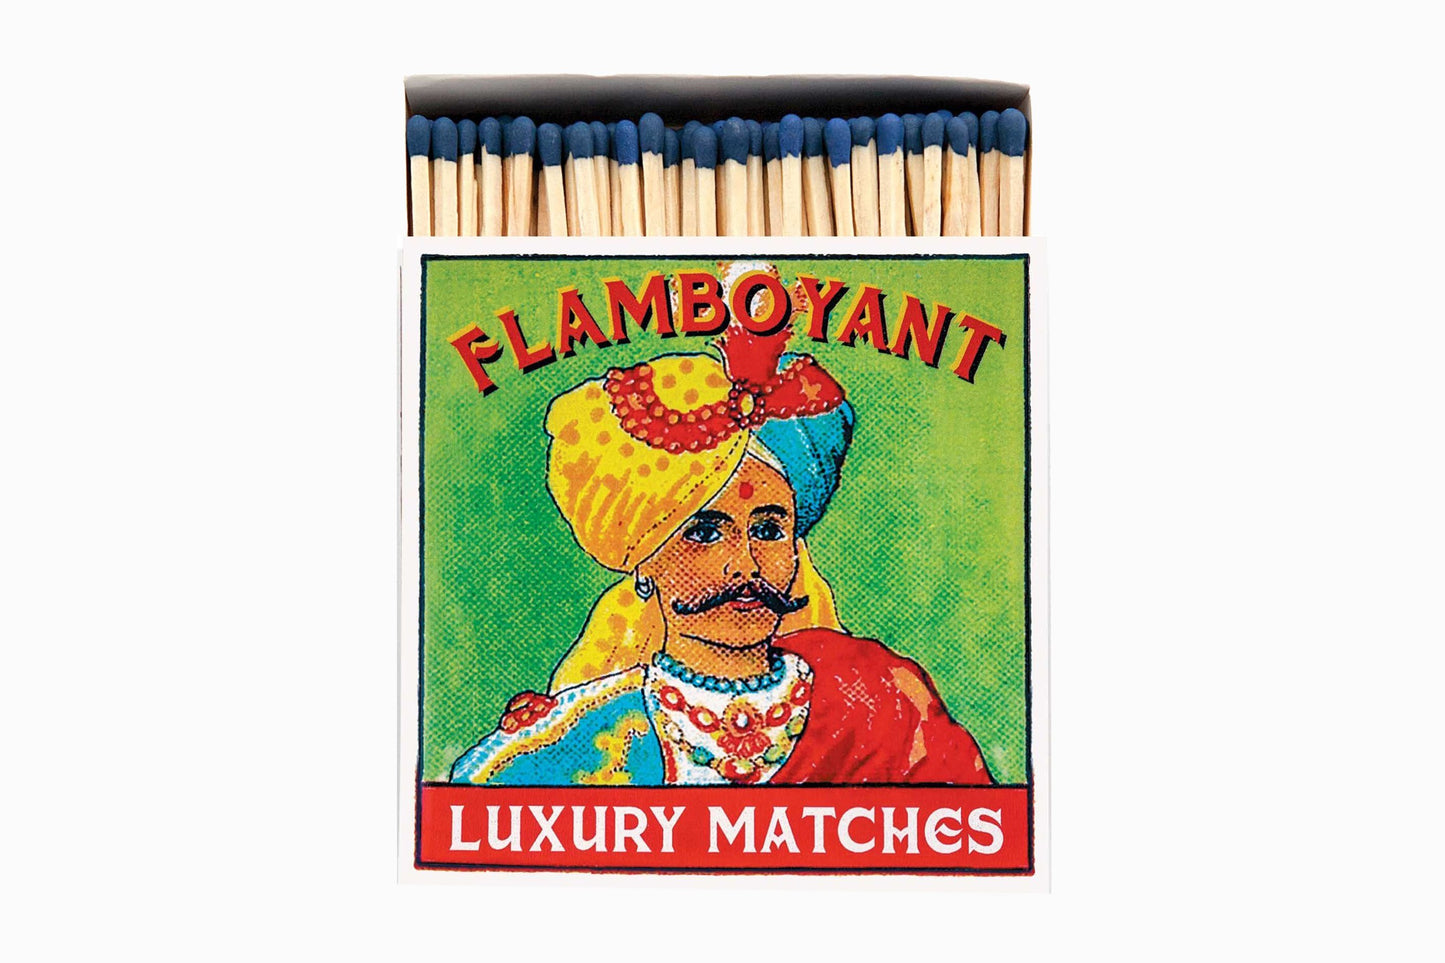 Flamboyant matches